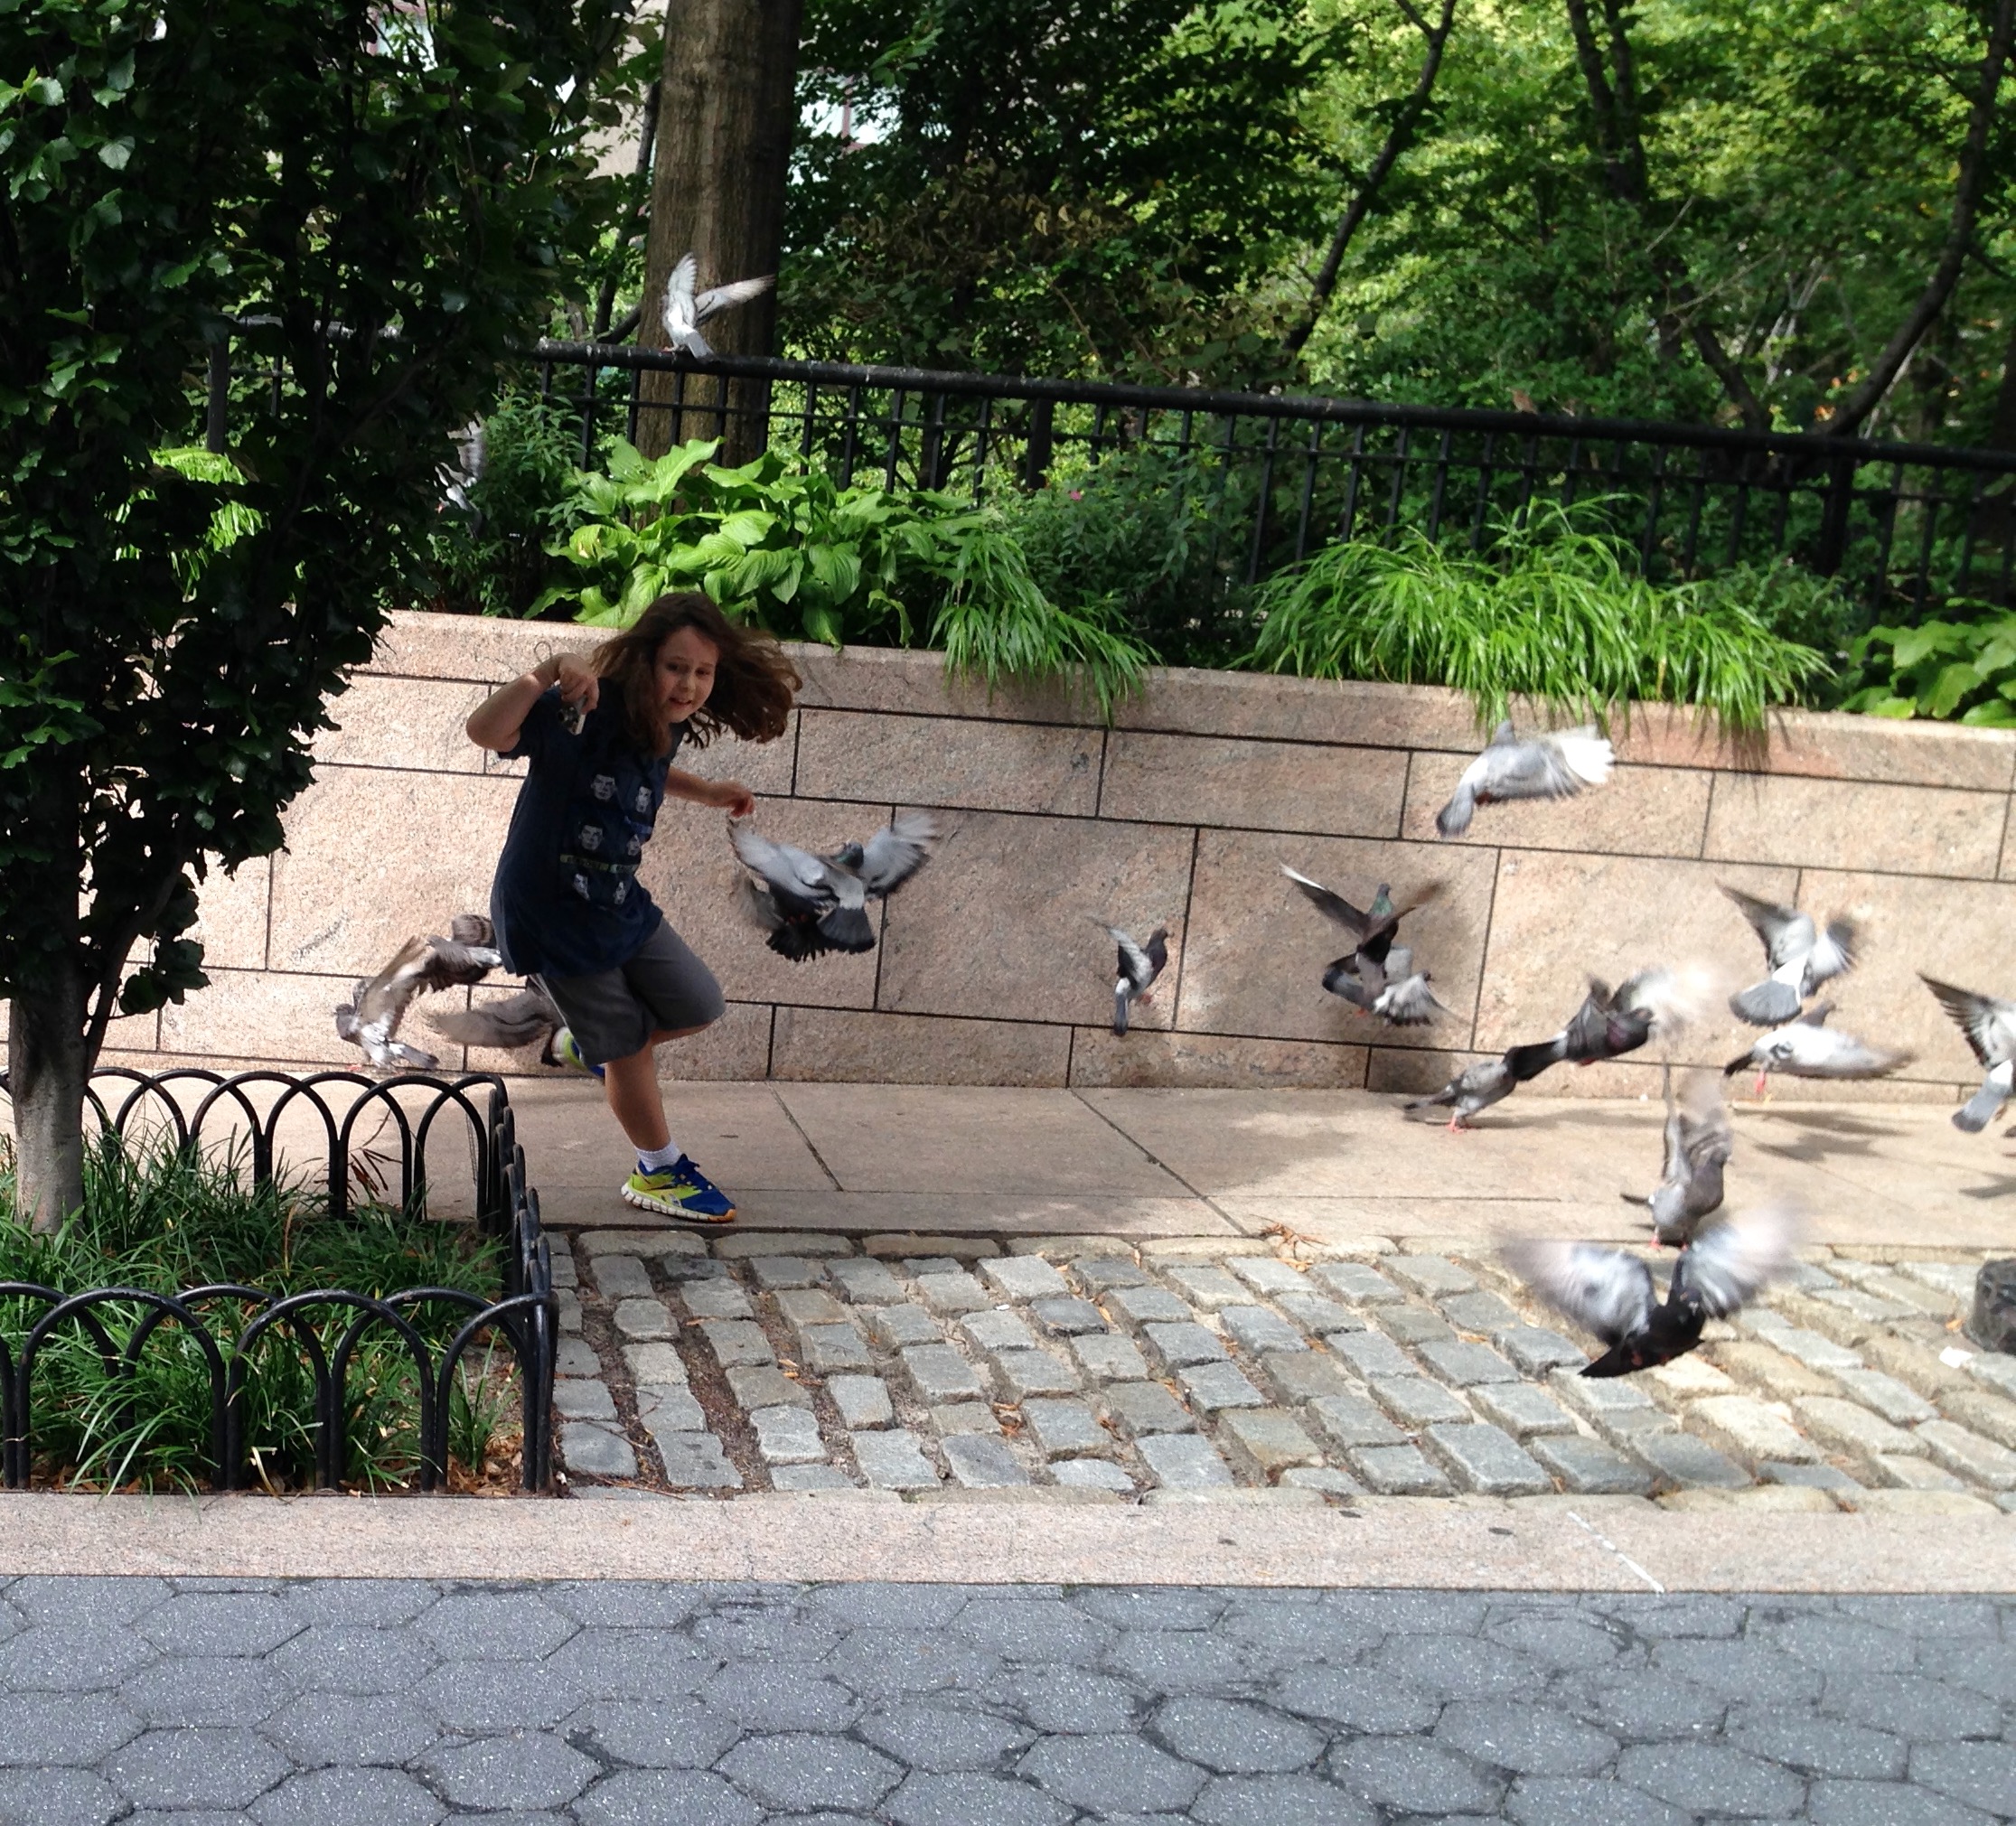 Chasing pigeons in lower Manhattan.